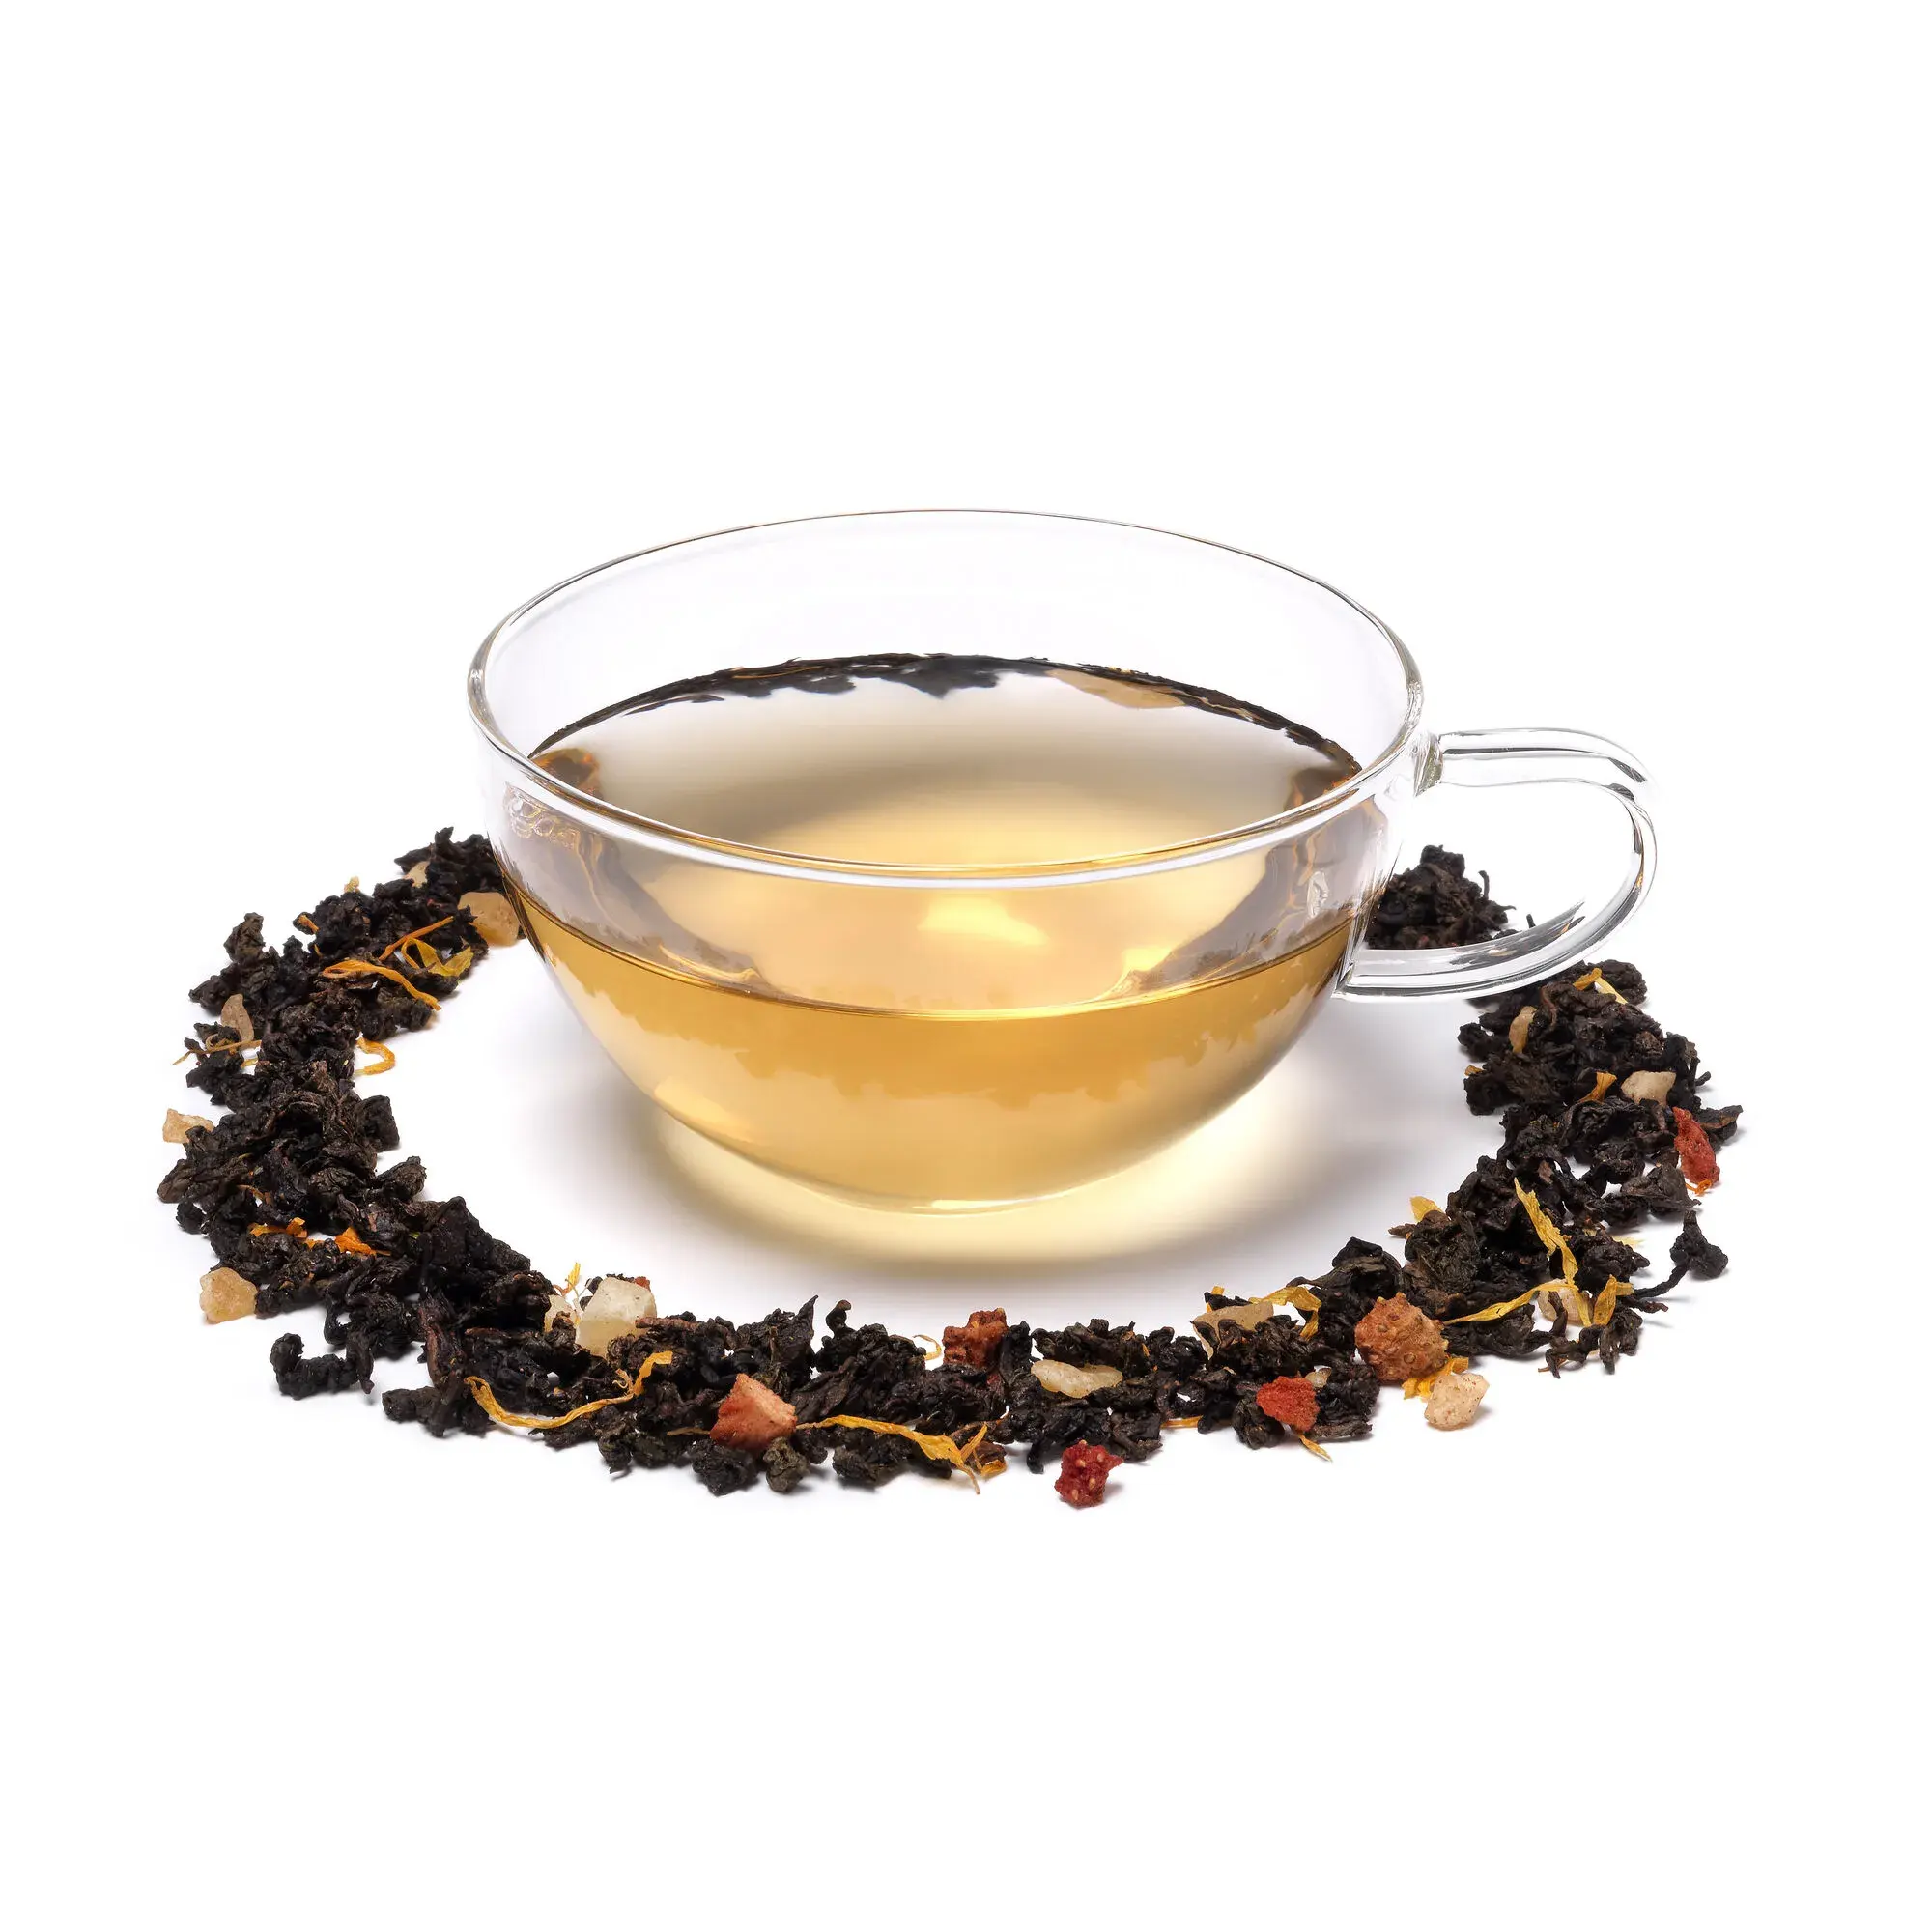 Made from Feng Huang China Royal One class single oolong tea organic bulk Oolong tea